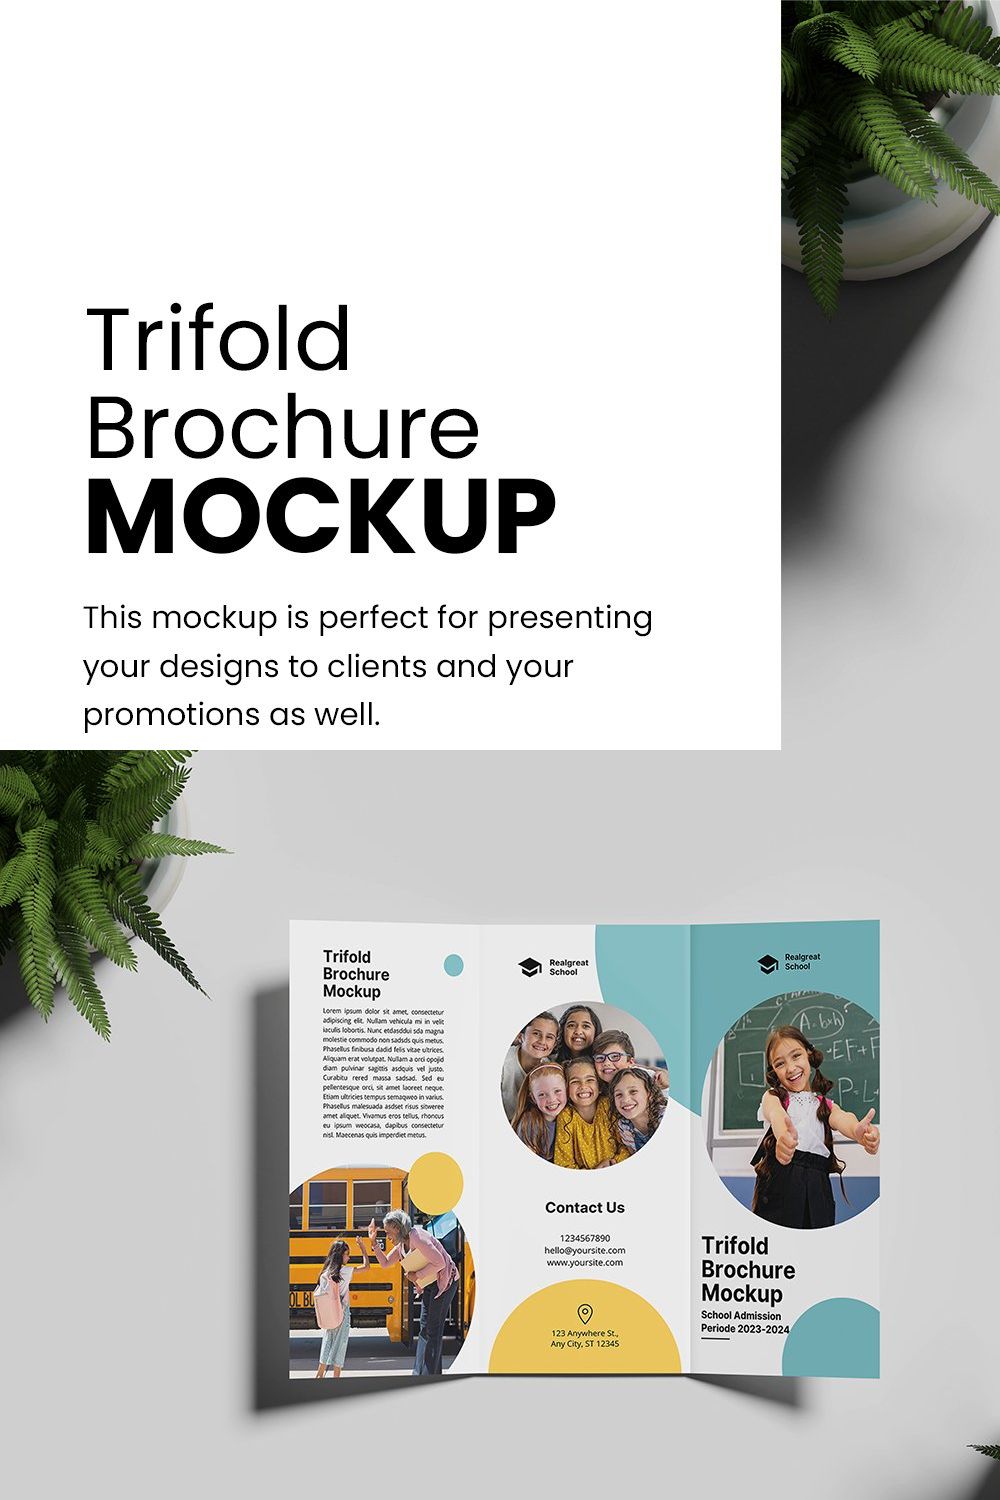 Trifold Brochure Mockup pinterest preview image.